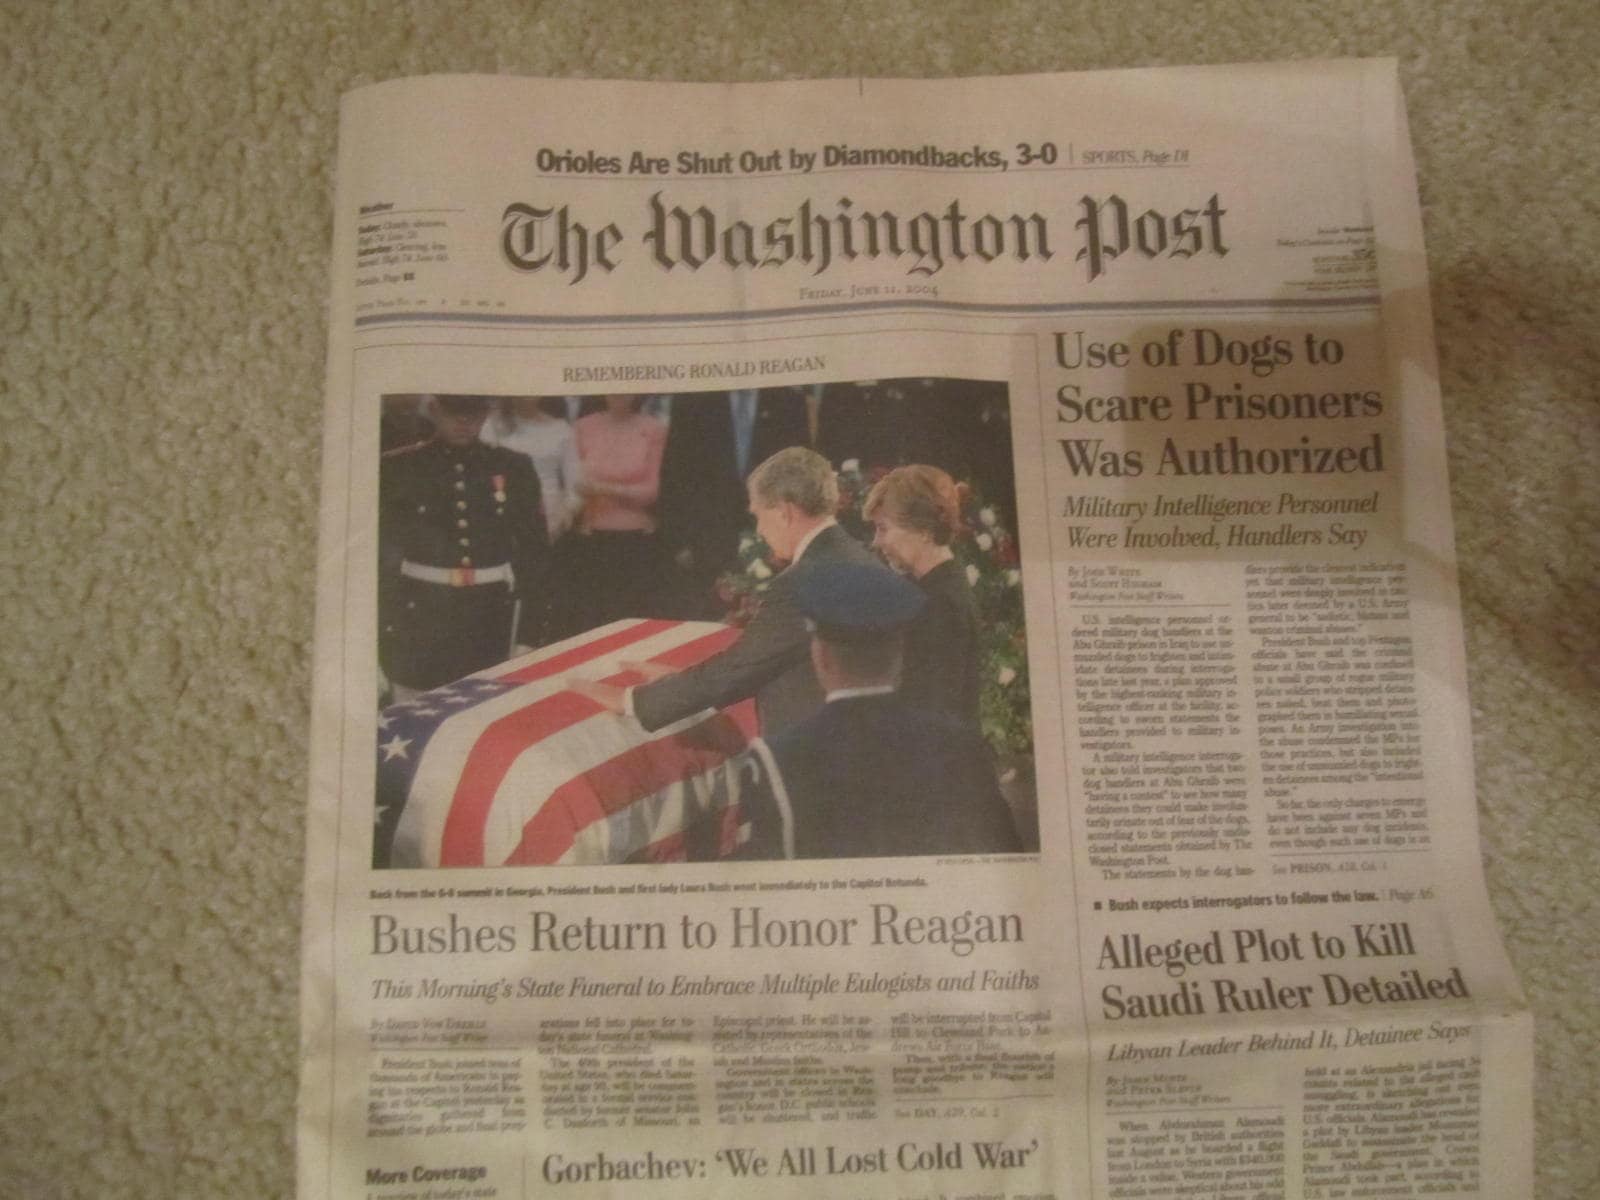 Bushes Return To Honor Reagan - Washington Post - June 11, 2004